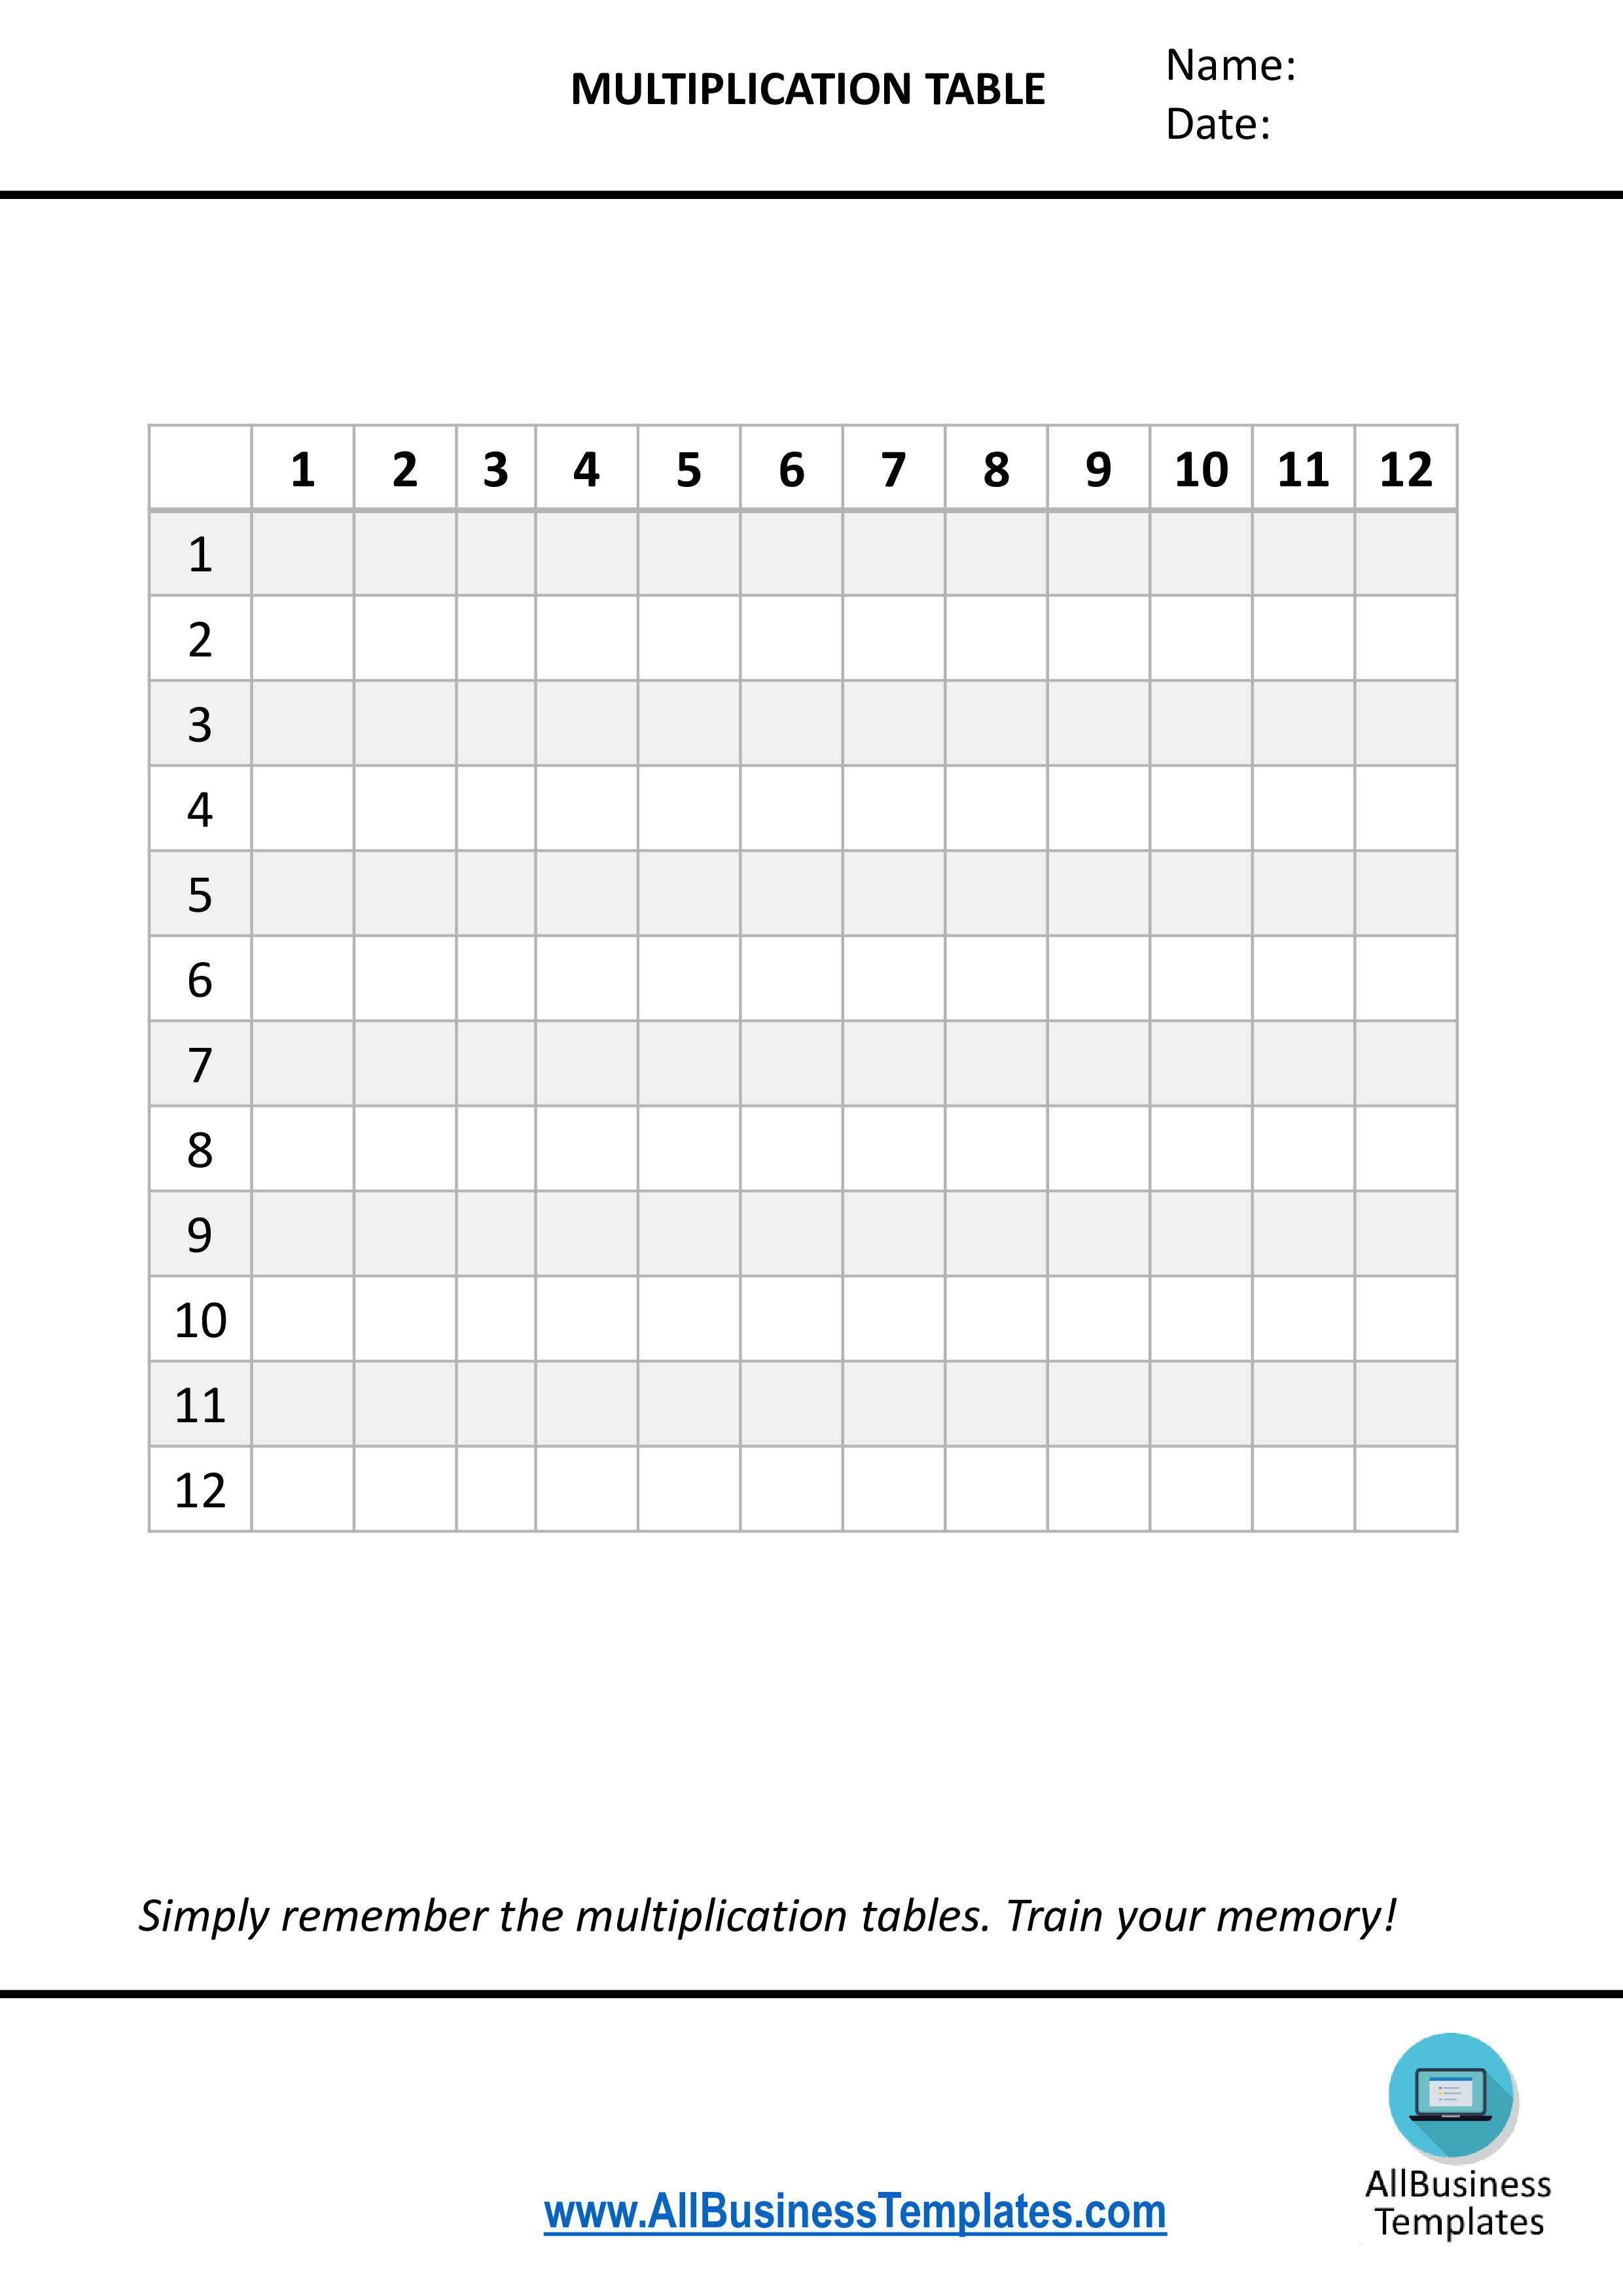 multiplication tables plantilla imagen principal